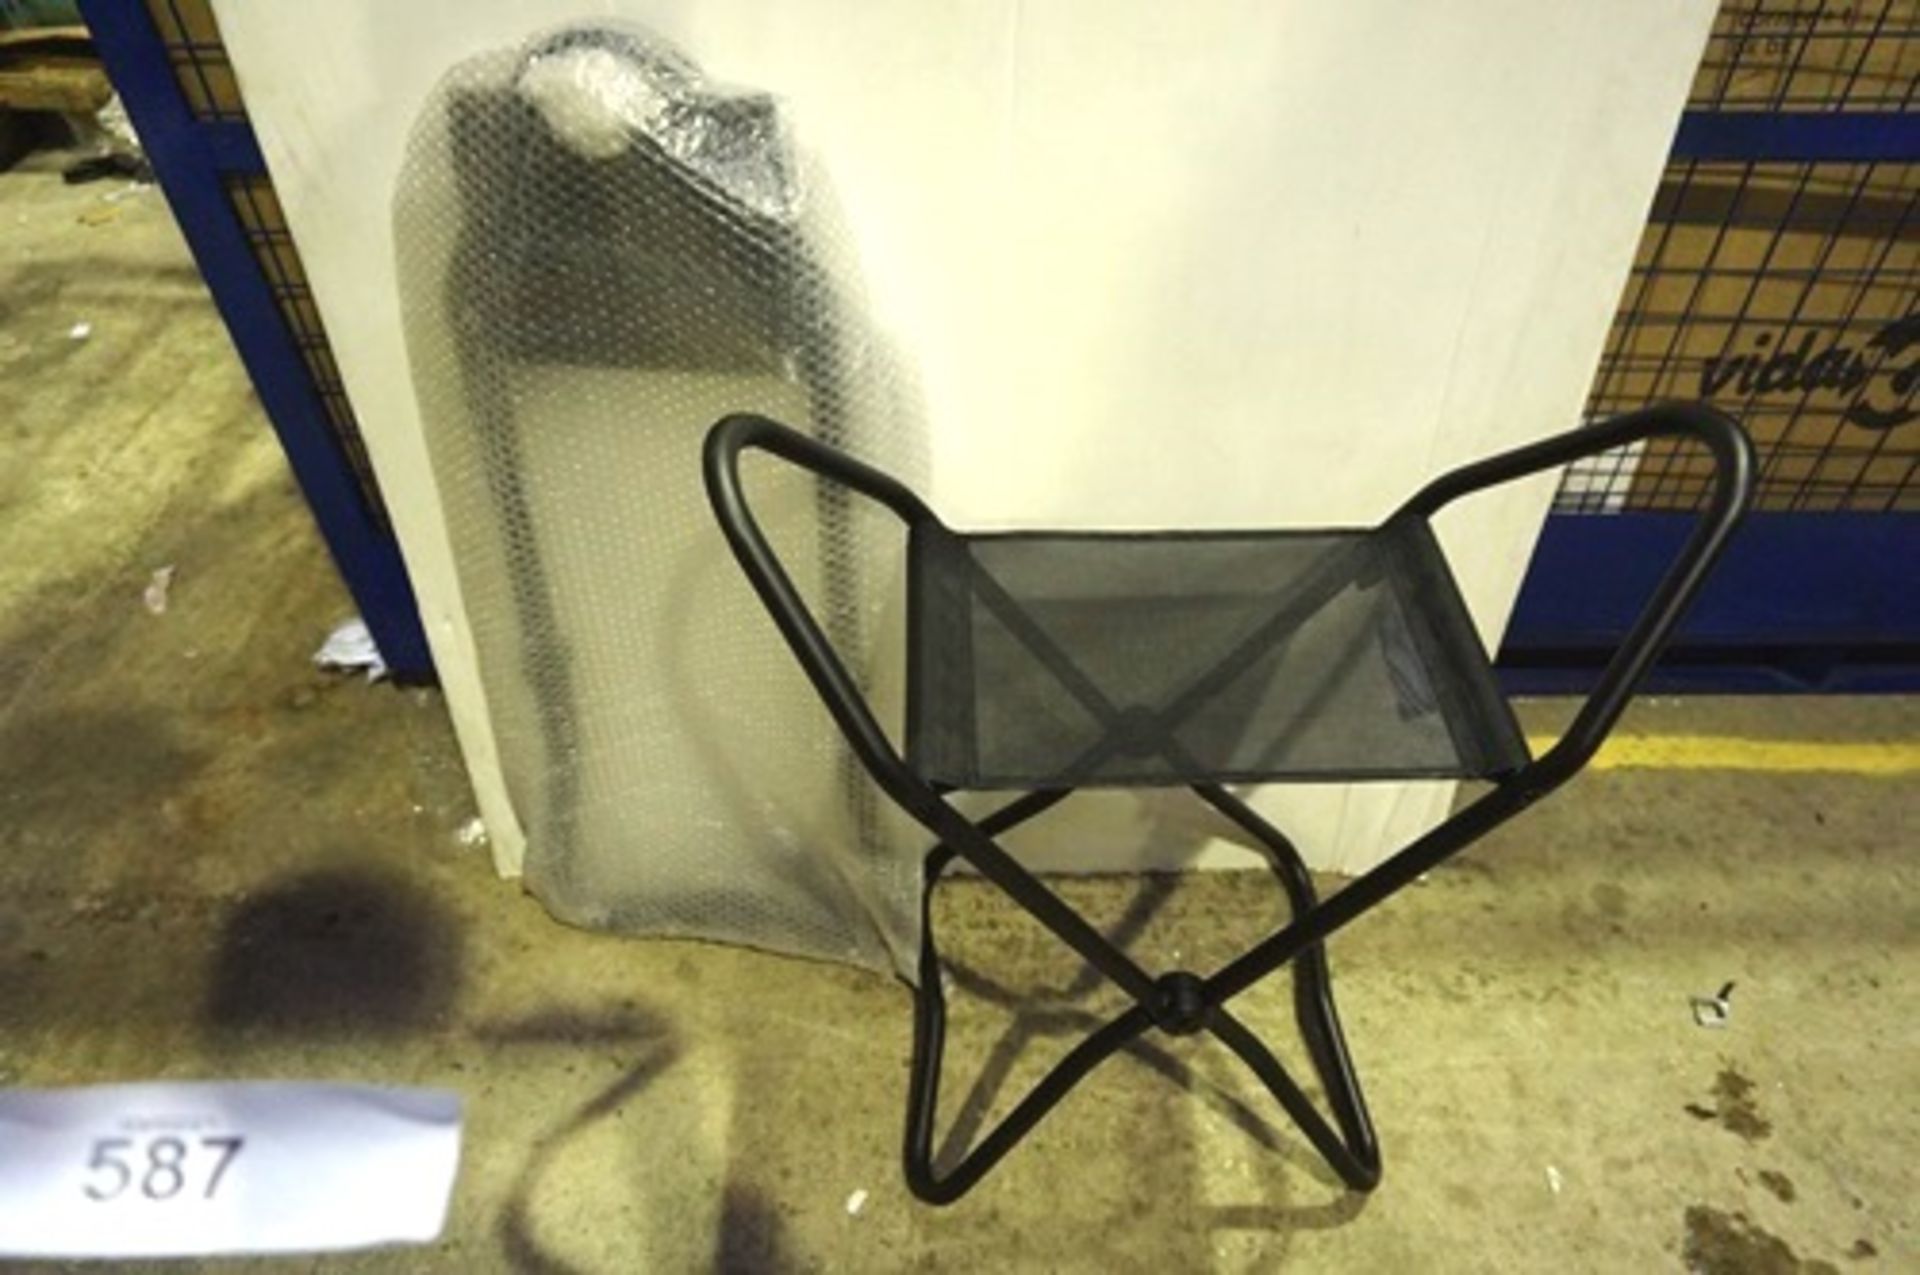 2 x Lectus Produktion black museum folding stools, RRP £85.00 each - New (GS43)